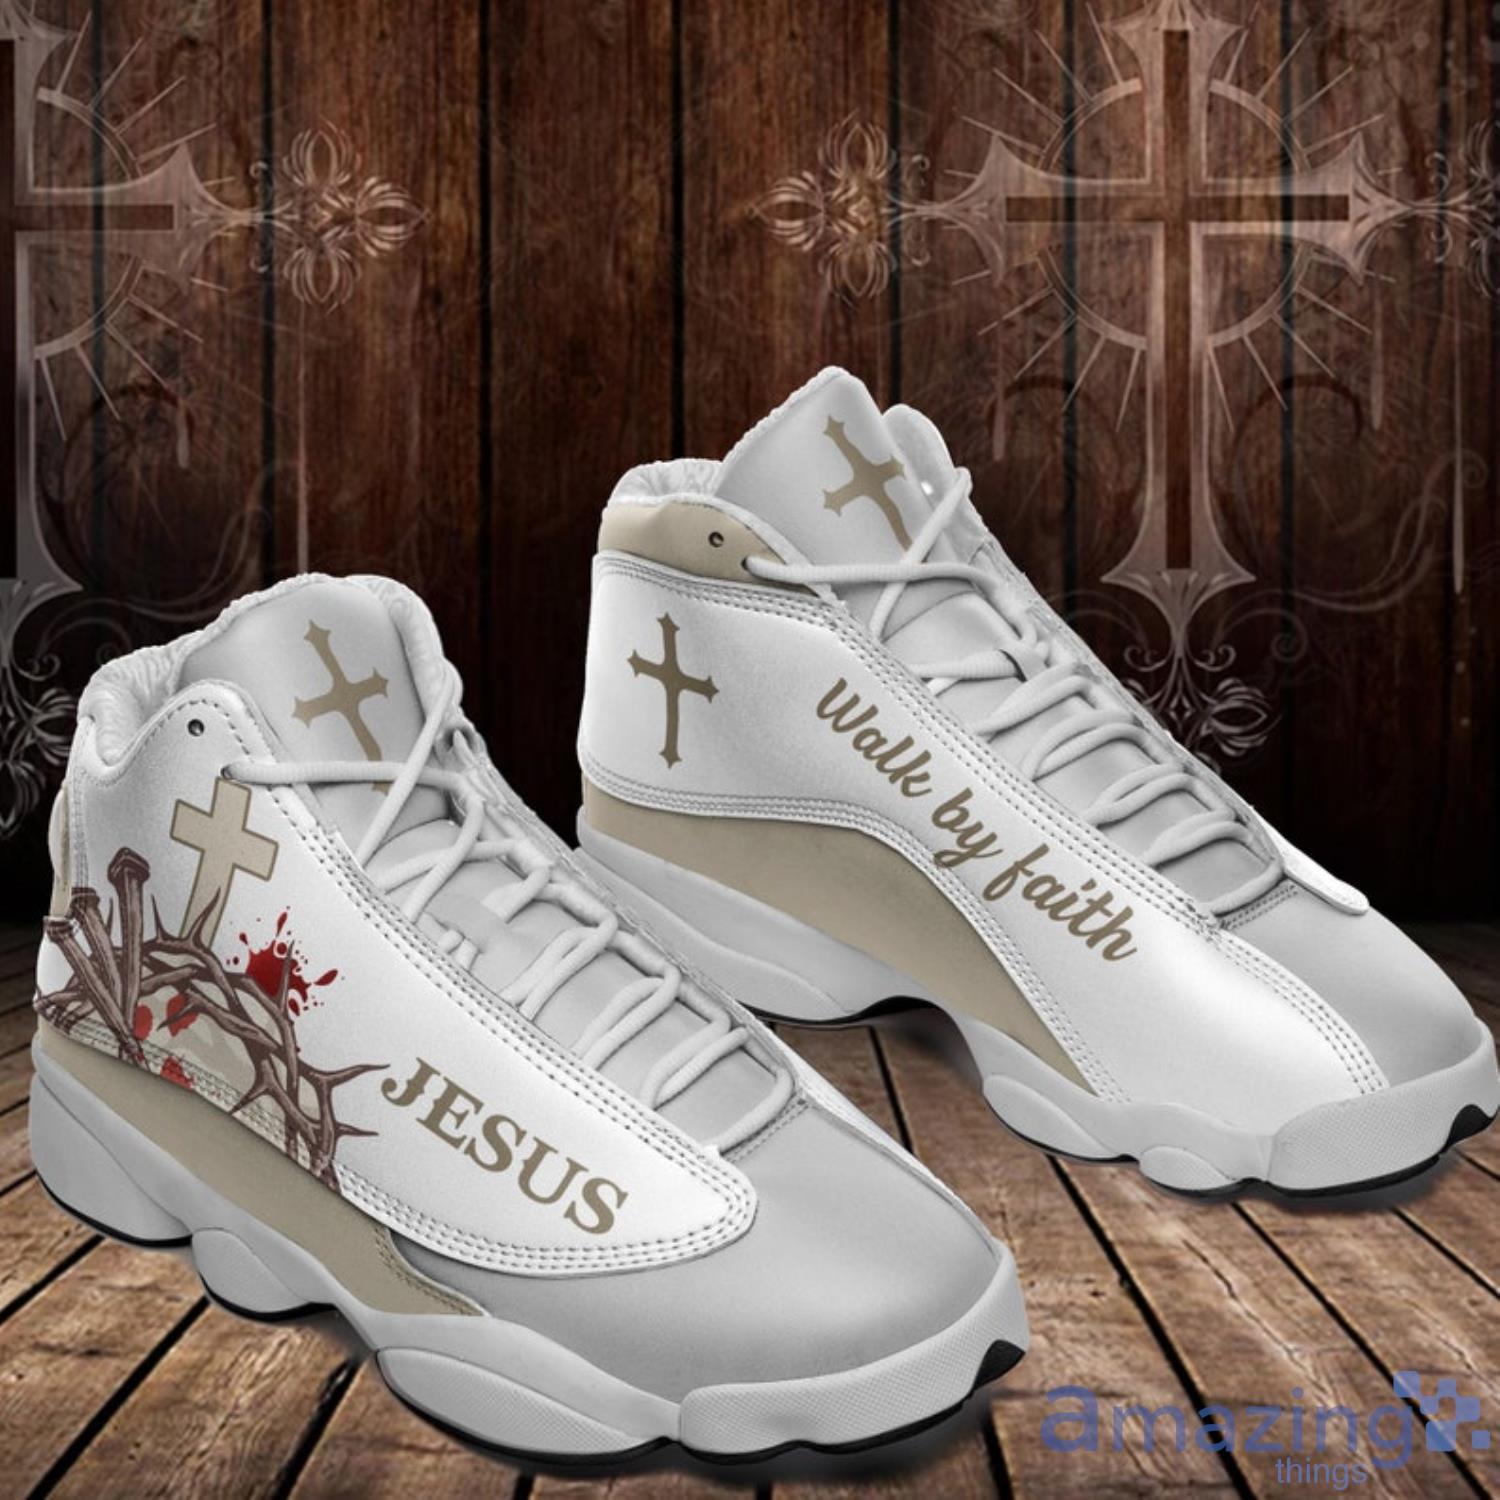 Jesus - Walk By Faith Sneakers Air Jordan 13